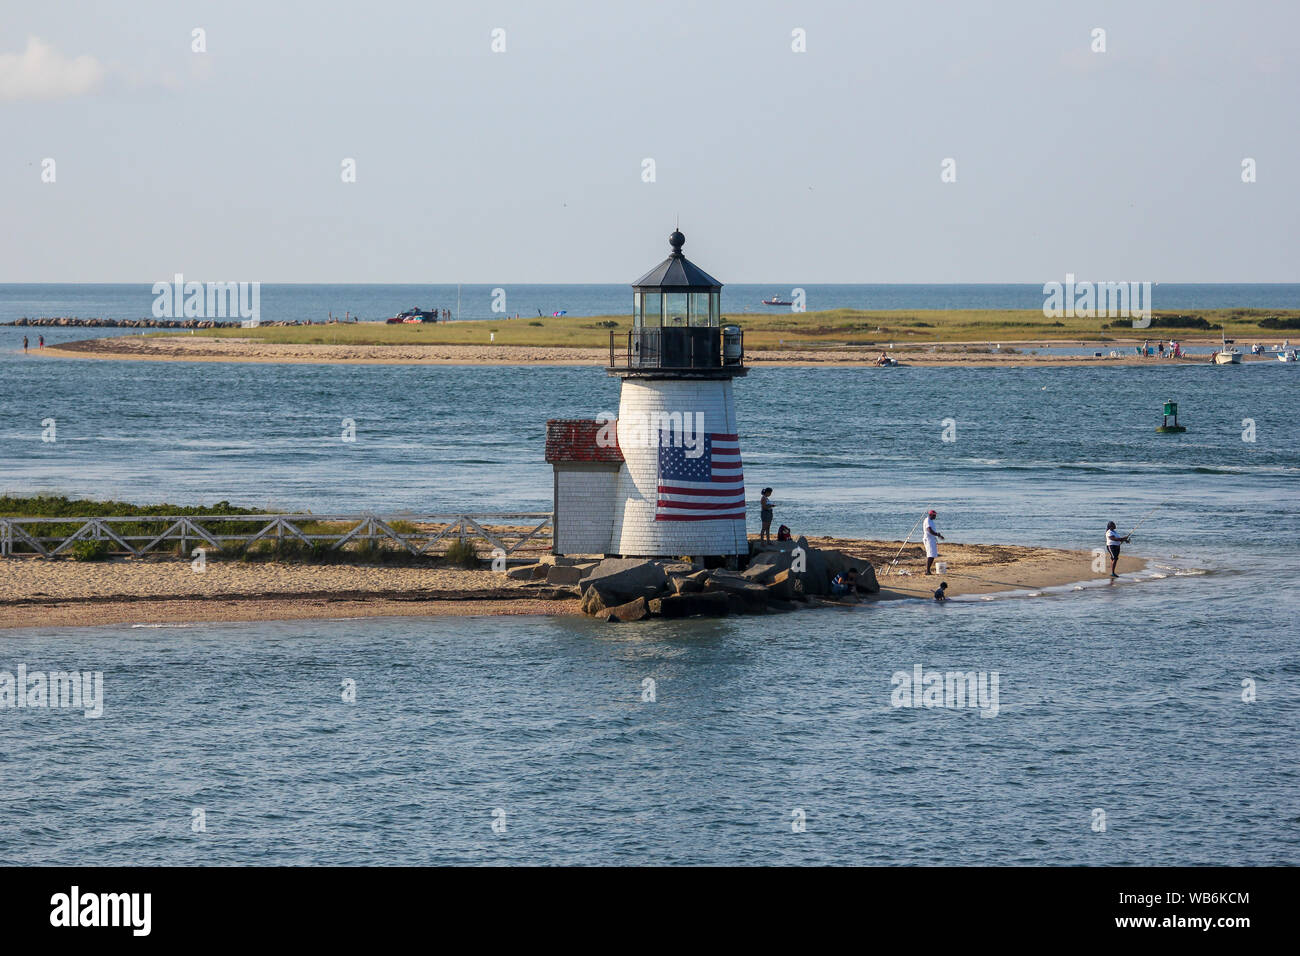 Brant Point Lighthouse, Brant Point, Nantucket, Massachusetts, United States Stock Photo